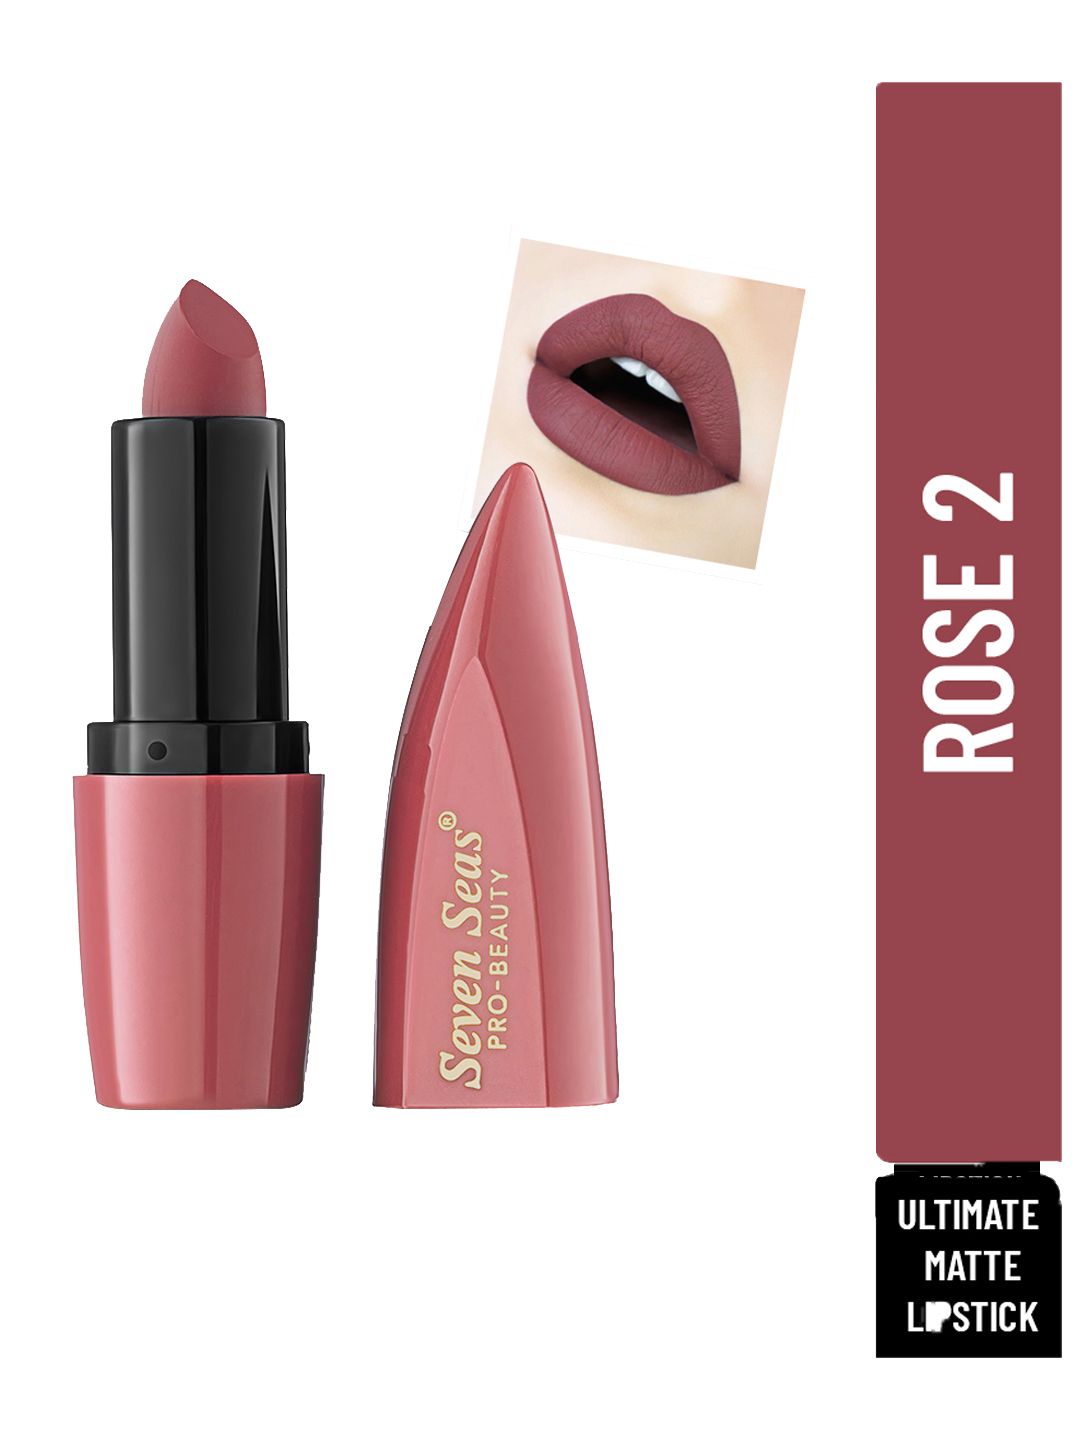 Seven Seas Brown Rose-II Ultimate Matte Lipstick Price in India